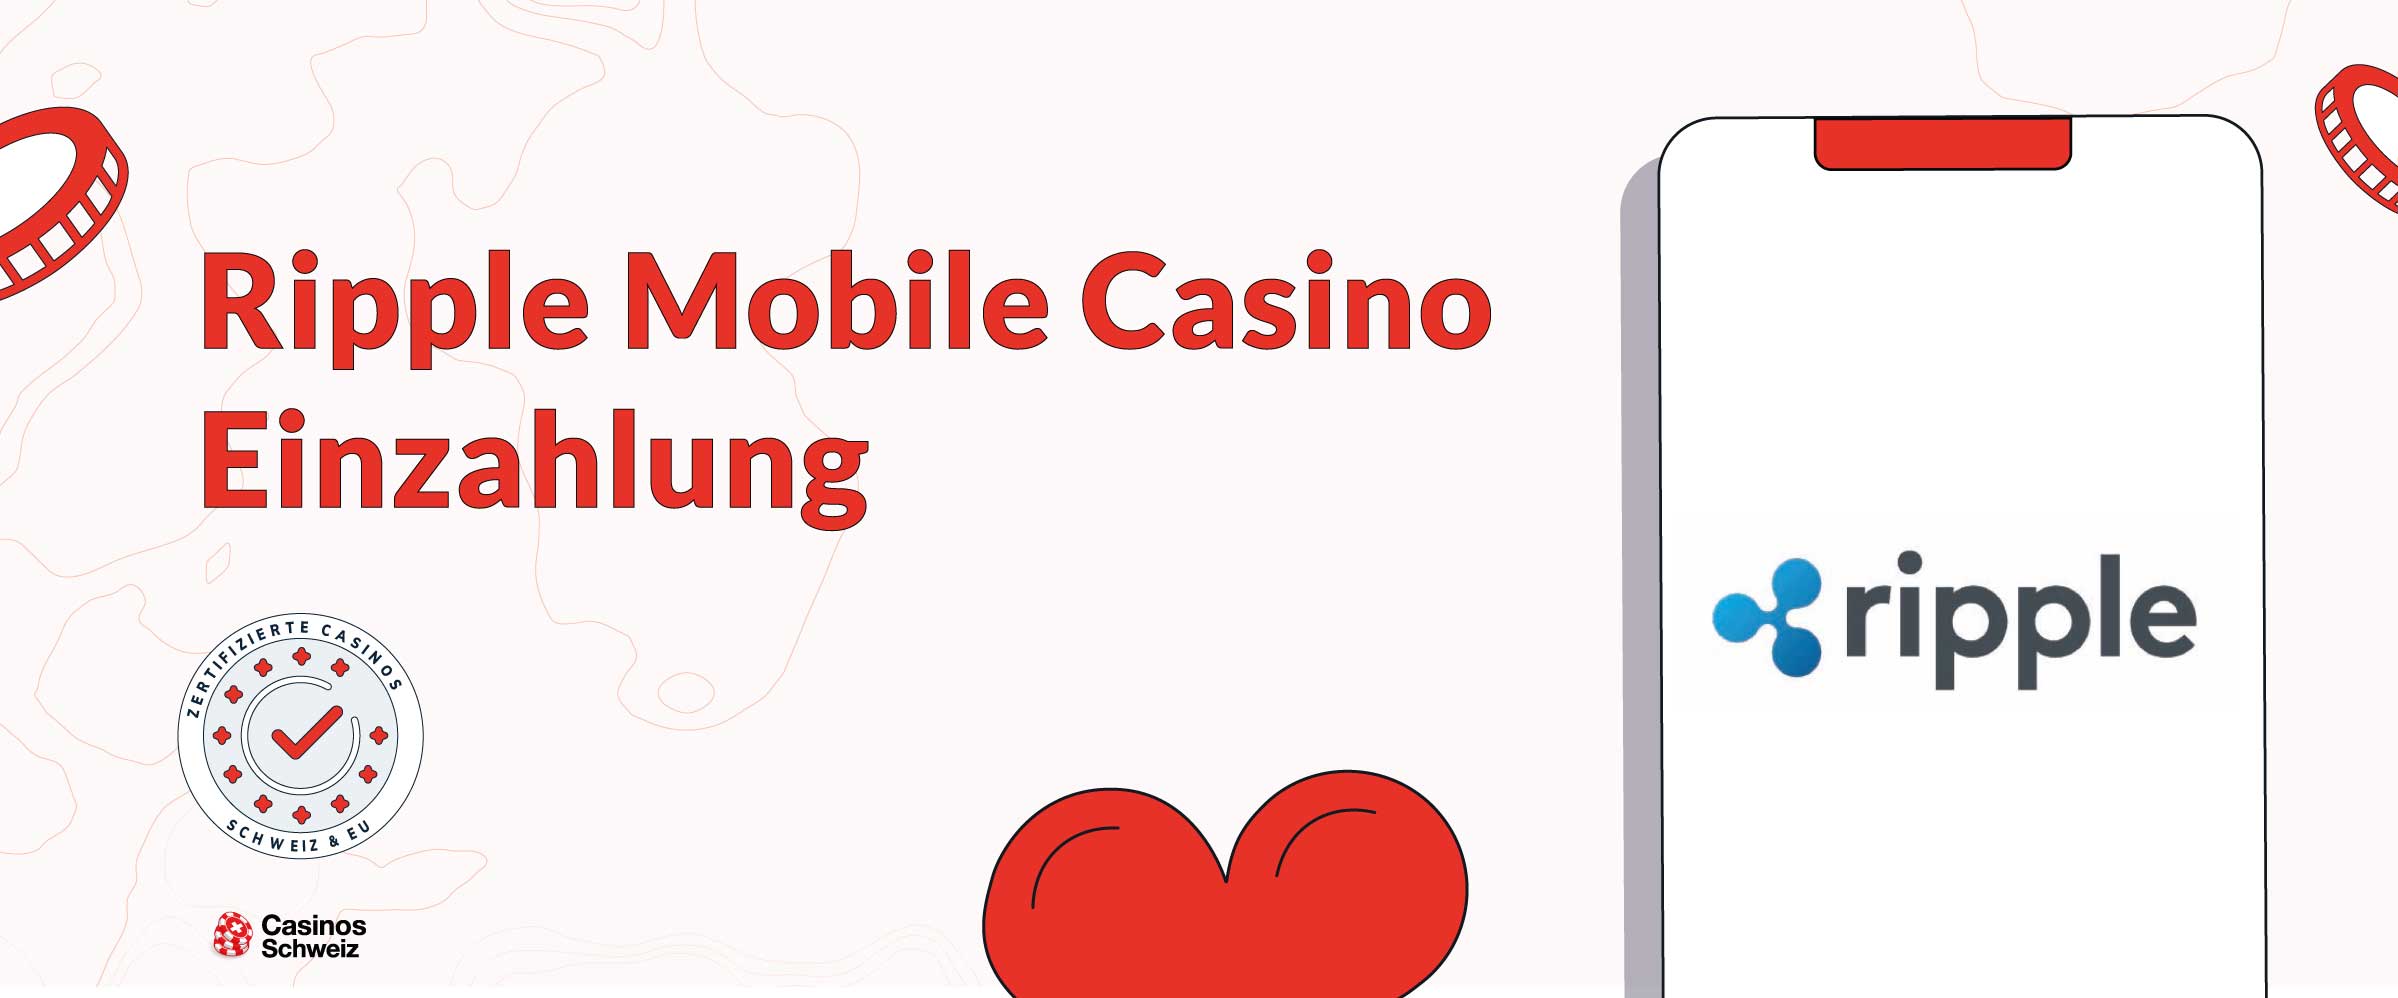 Ripple Mobile Casino Einzahlung